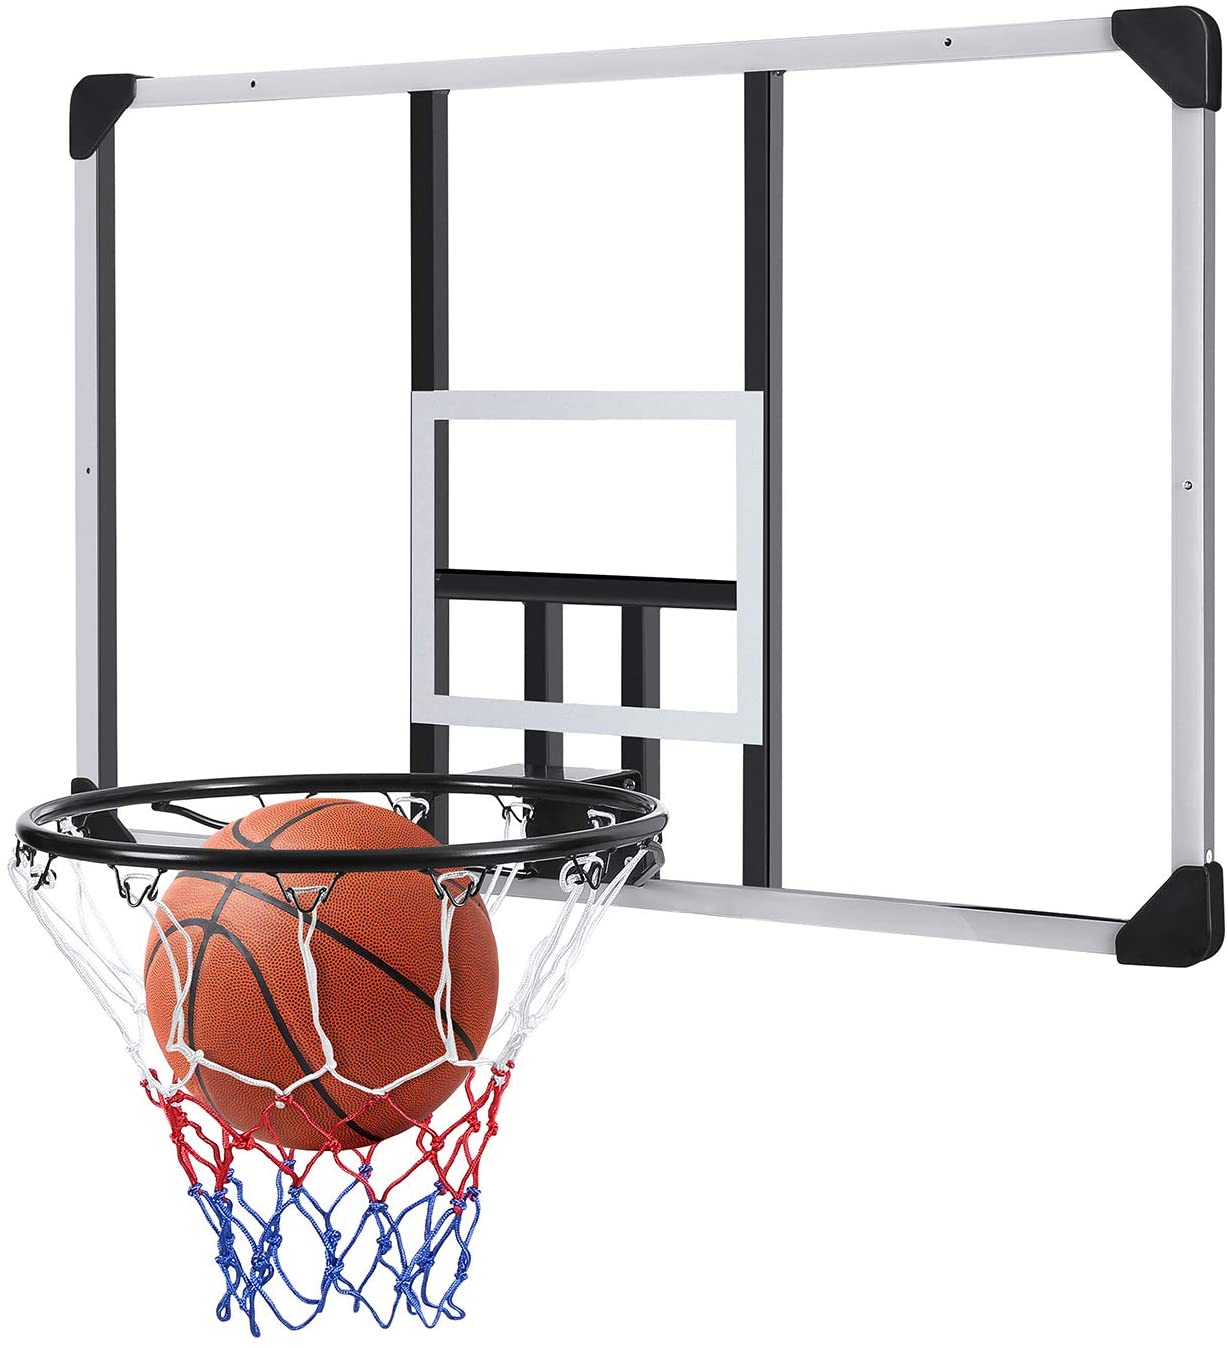 blh Basketball Backboard Wall-Mount Hoops